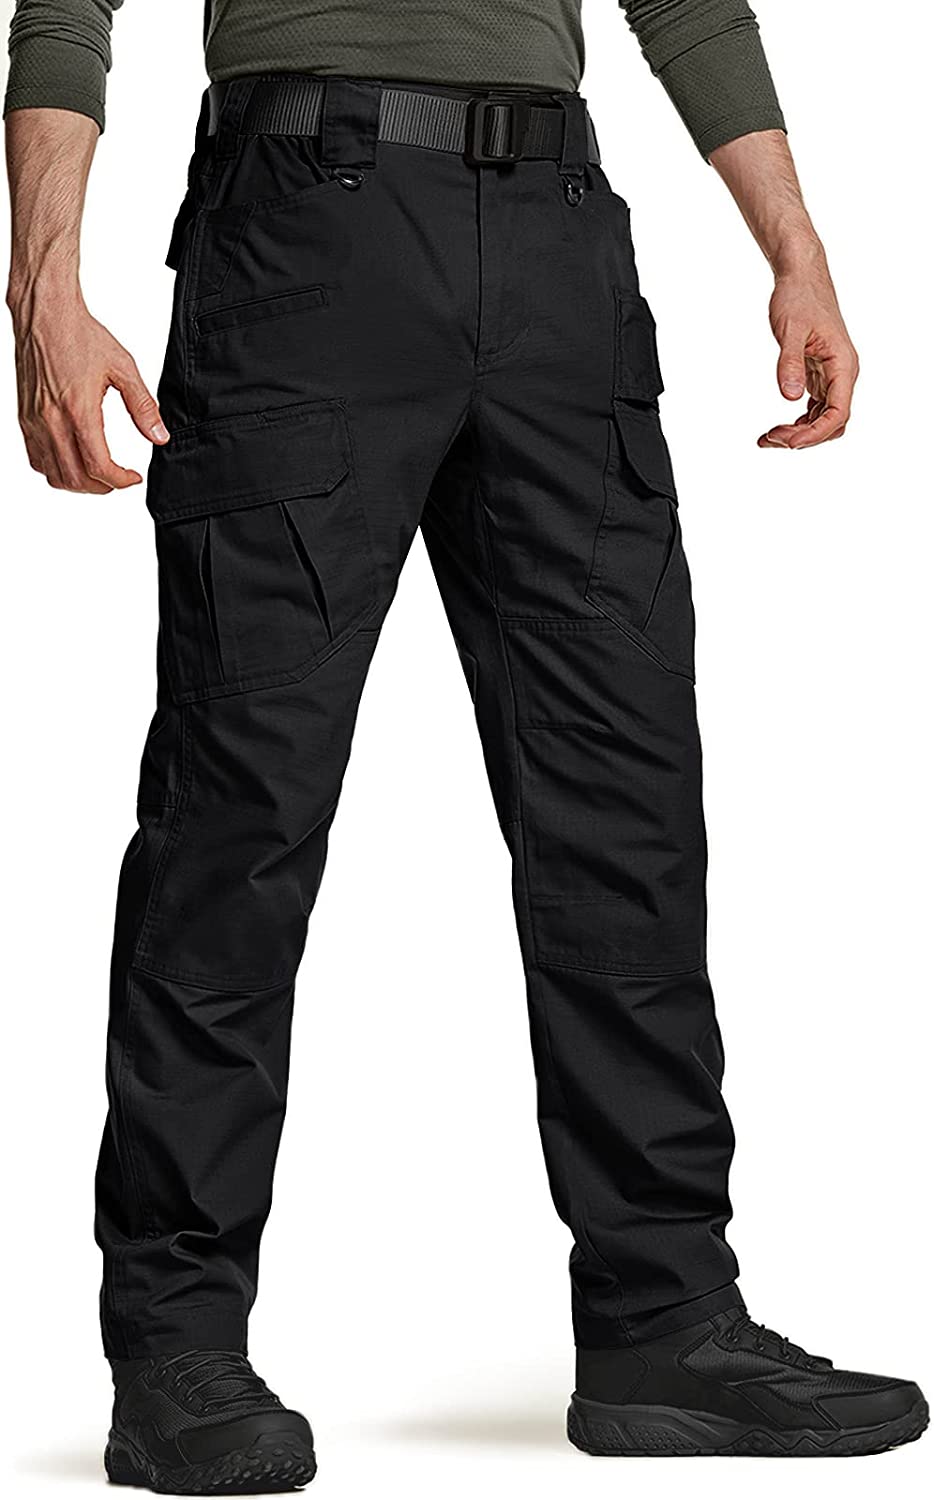 First Tactical Men's Defender Pants Combat Cargos Security Trousers Black